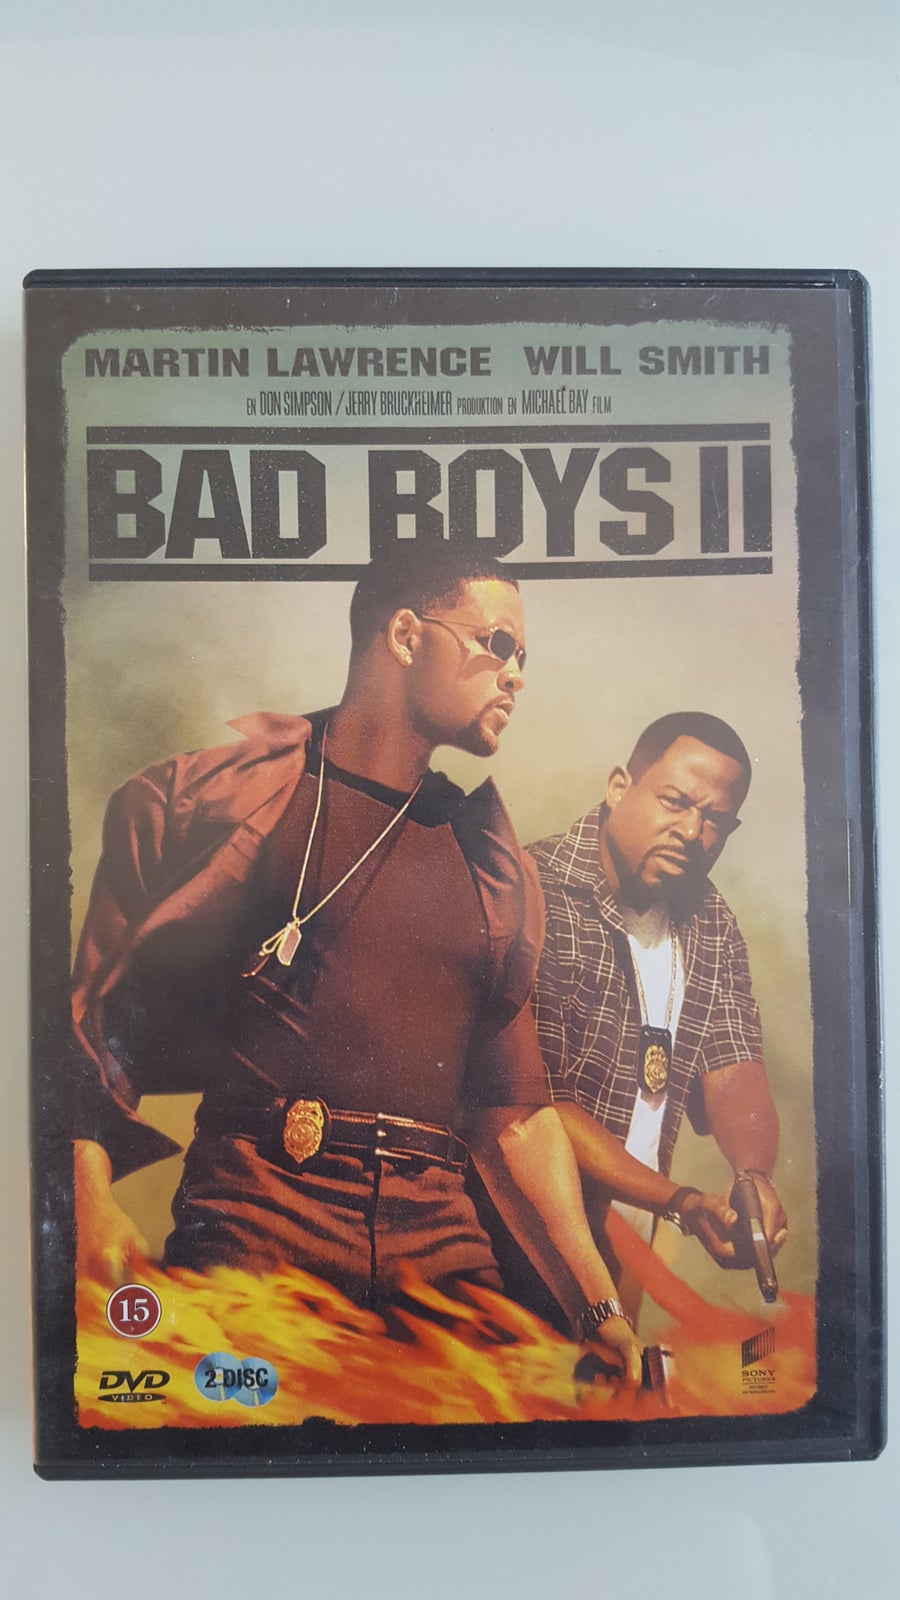 Bad boys 2, DVD, action